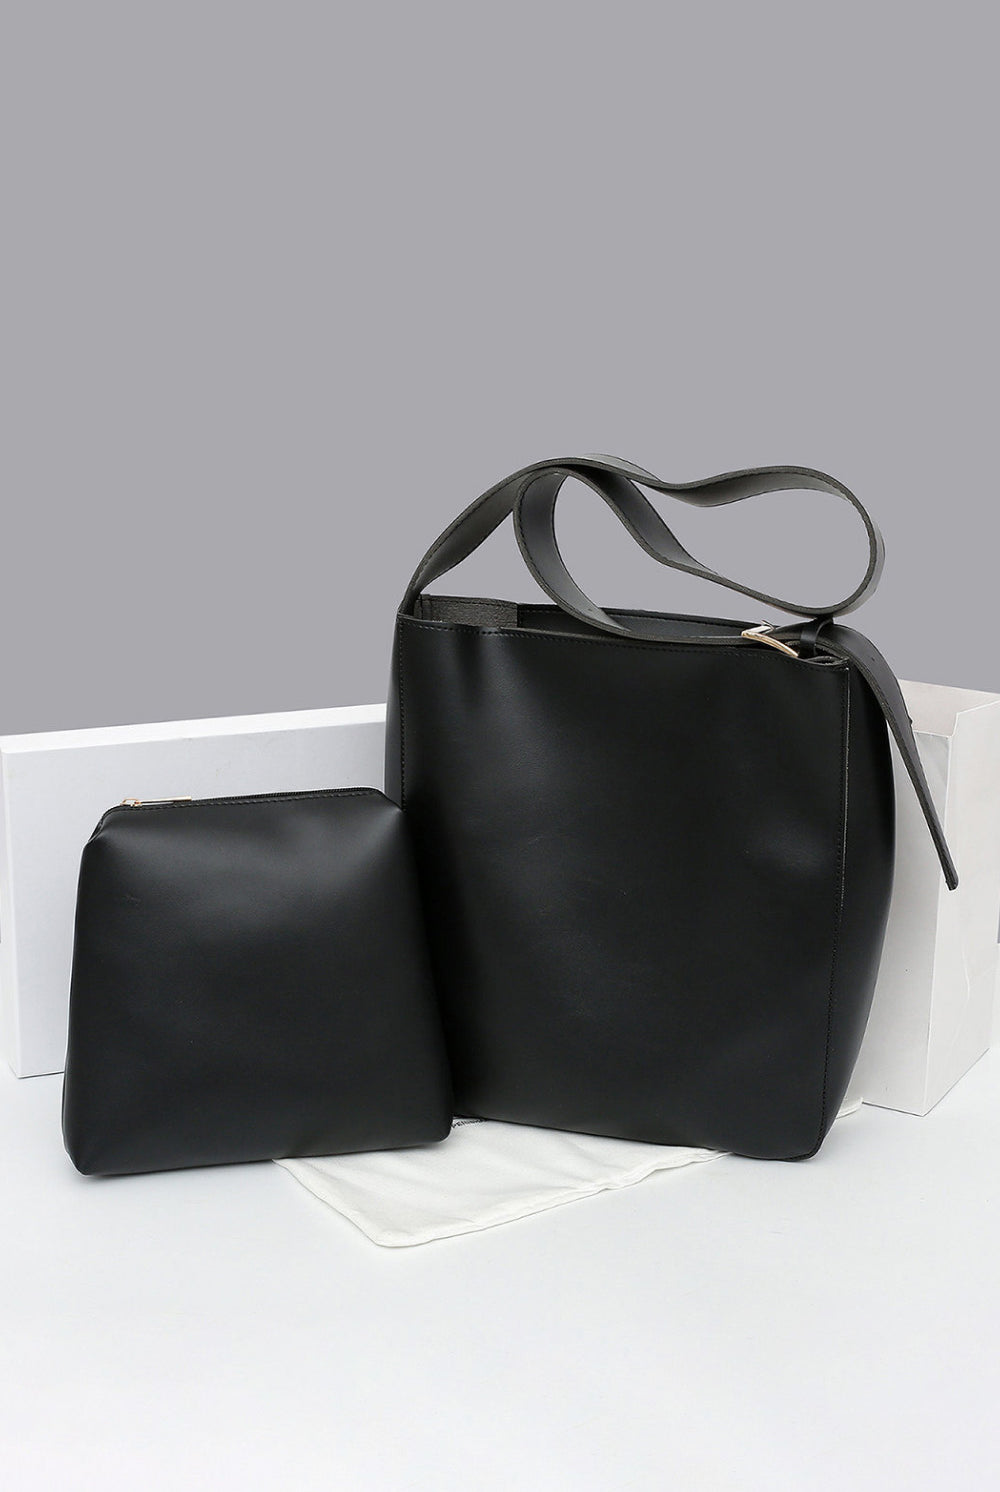 Adored 2-Piece PU Leather Tote Bag Set - GemThreads Boutique Adored 2-Piece PU Leather Tote Bag Set